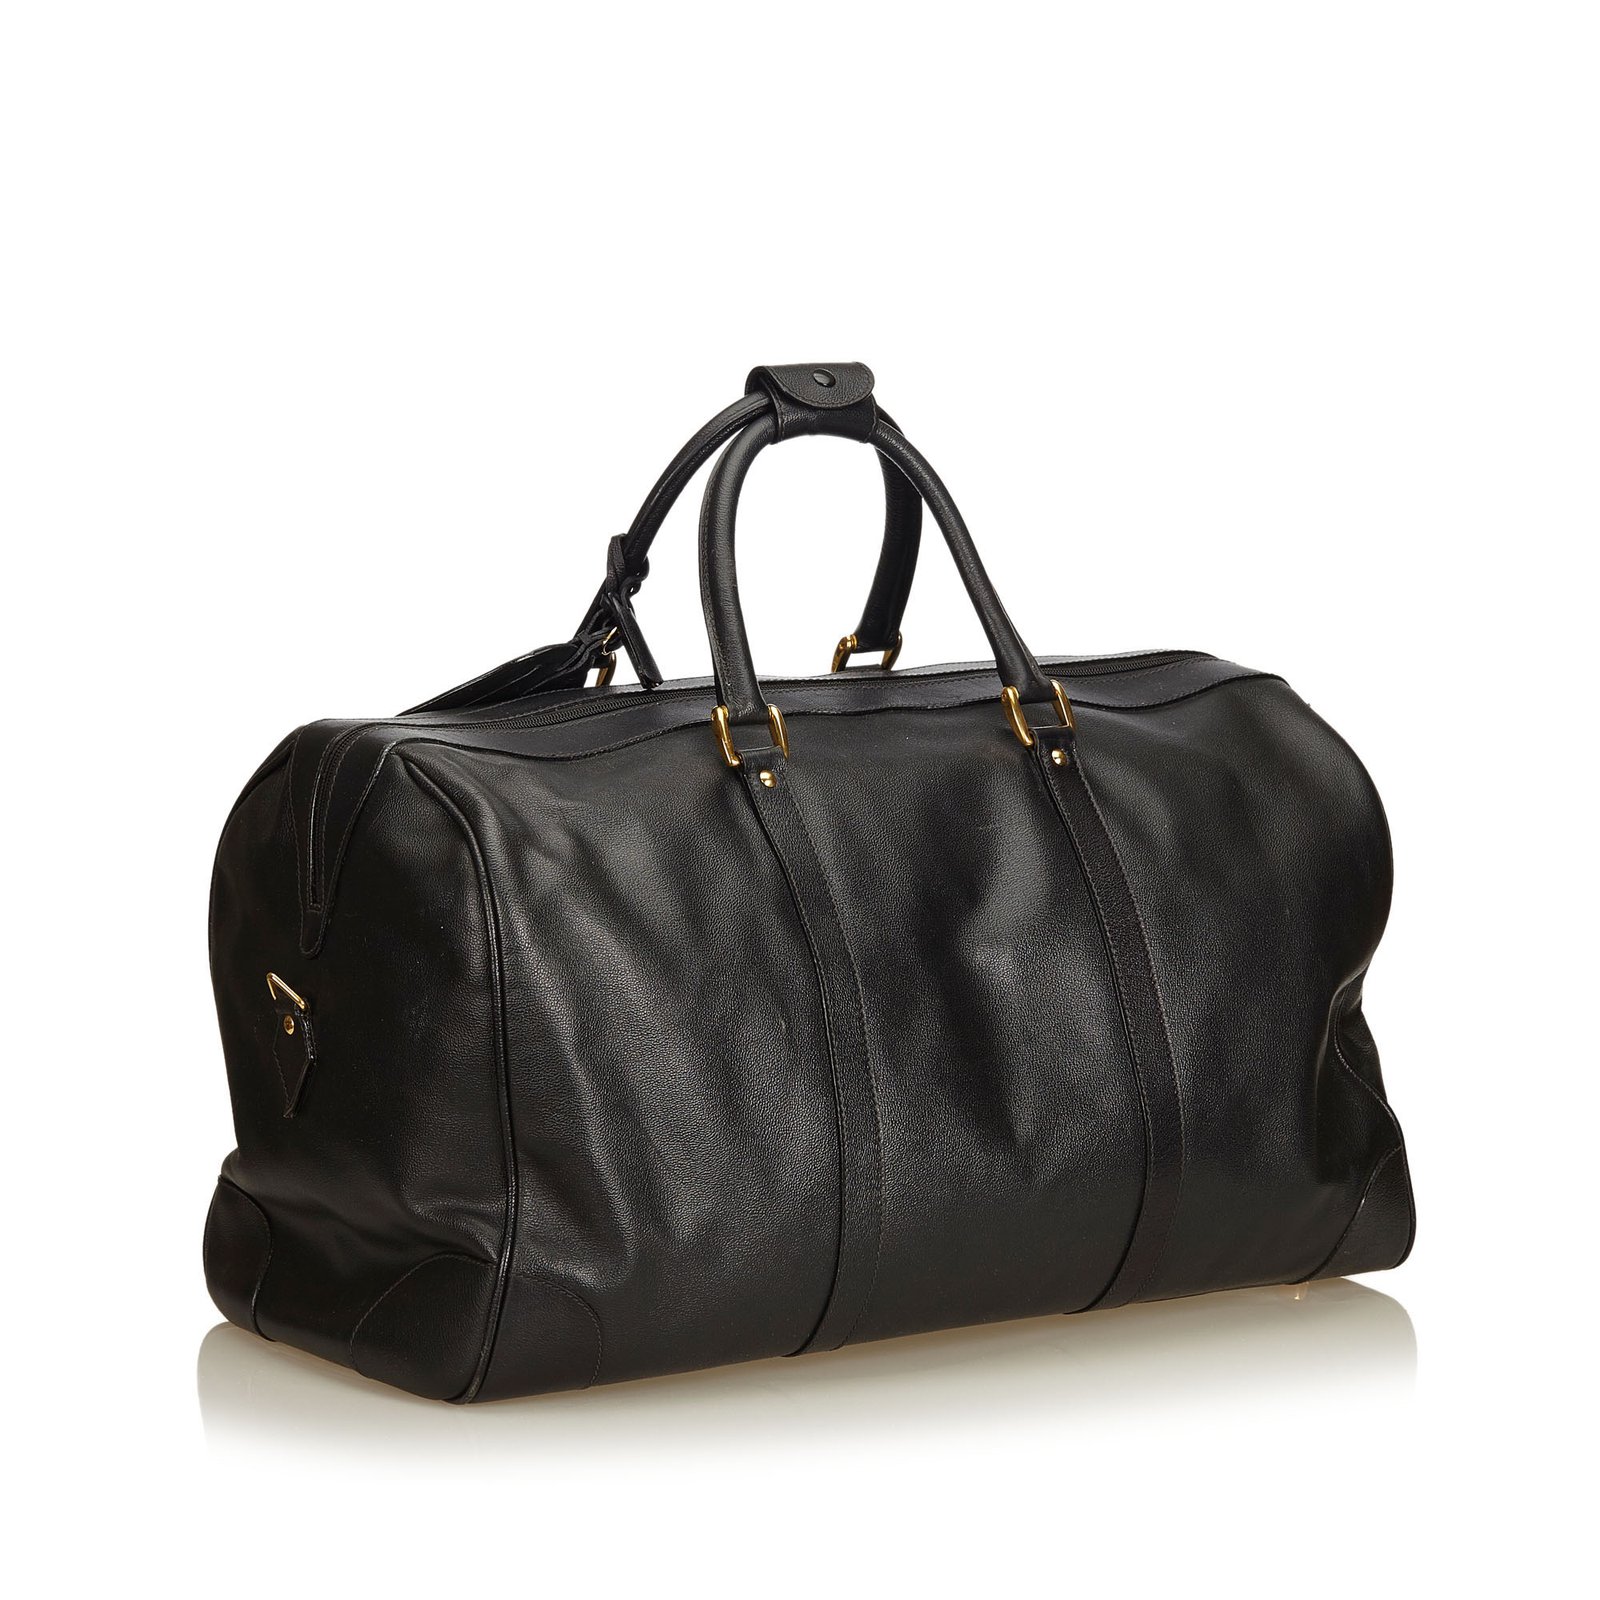 Gucci Leather Duffle Bag Travel bag 